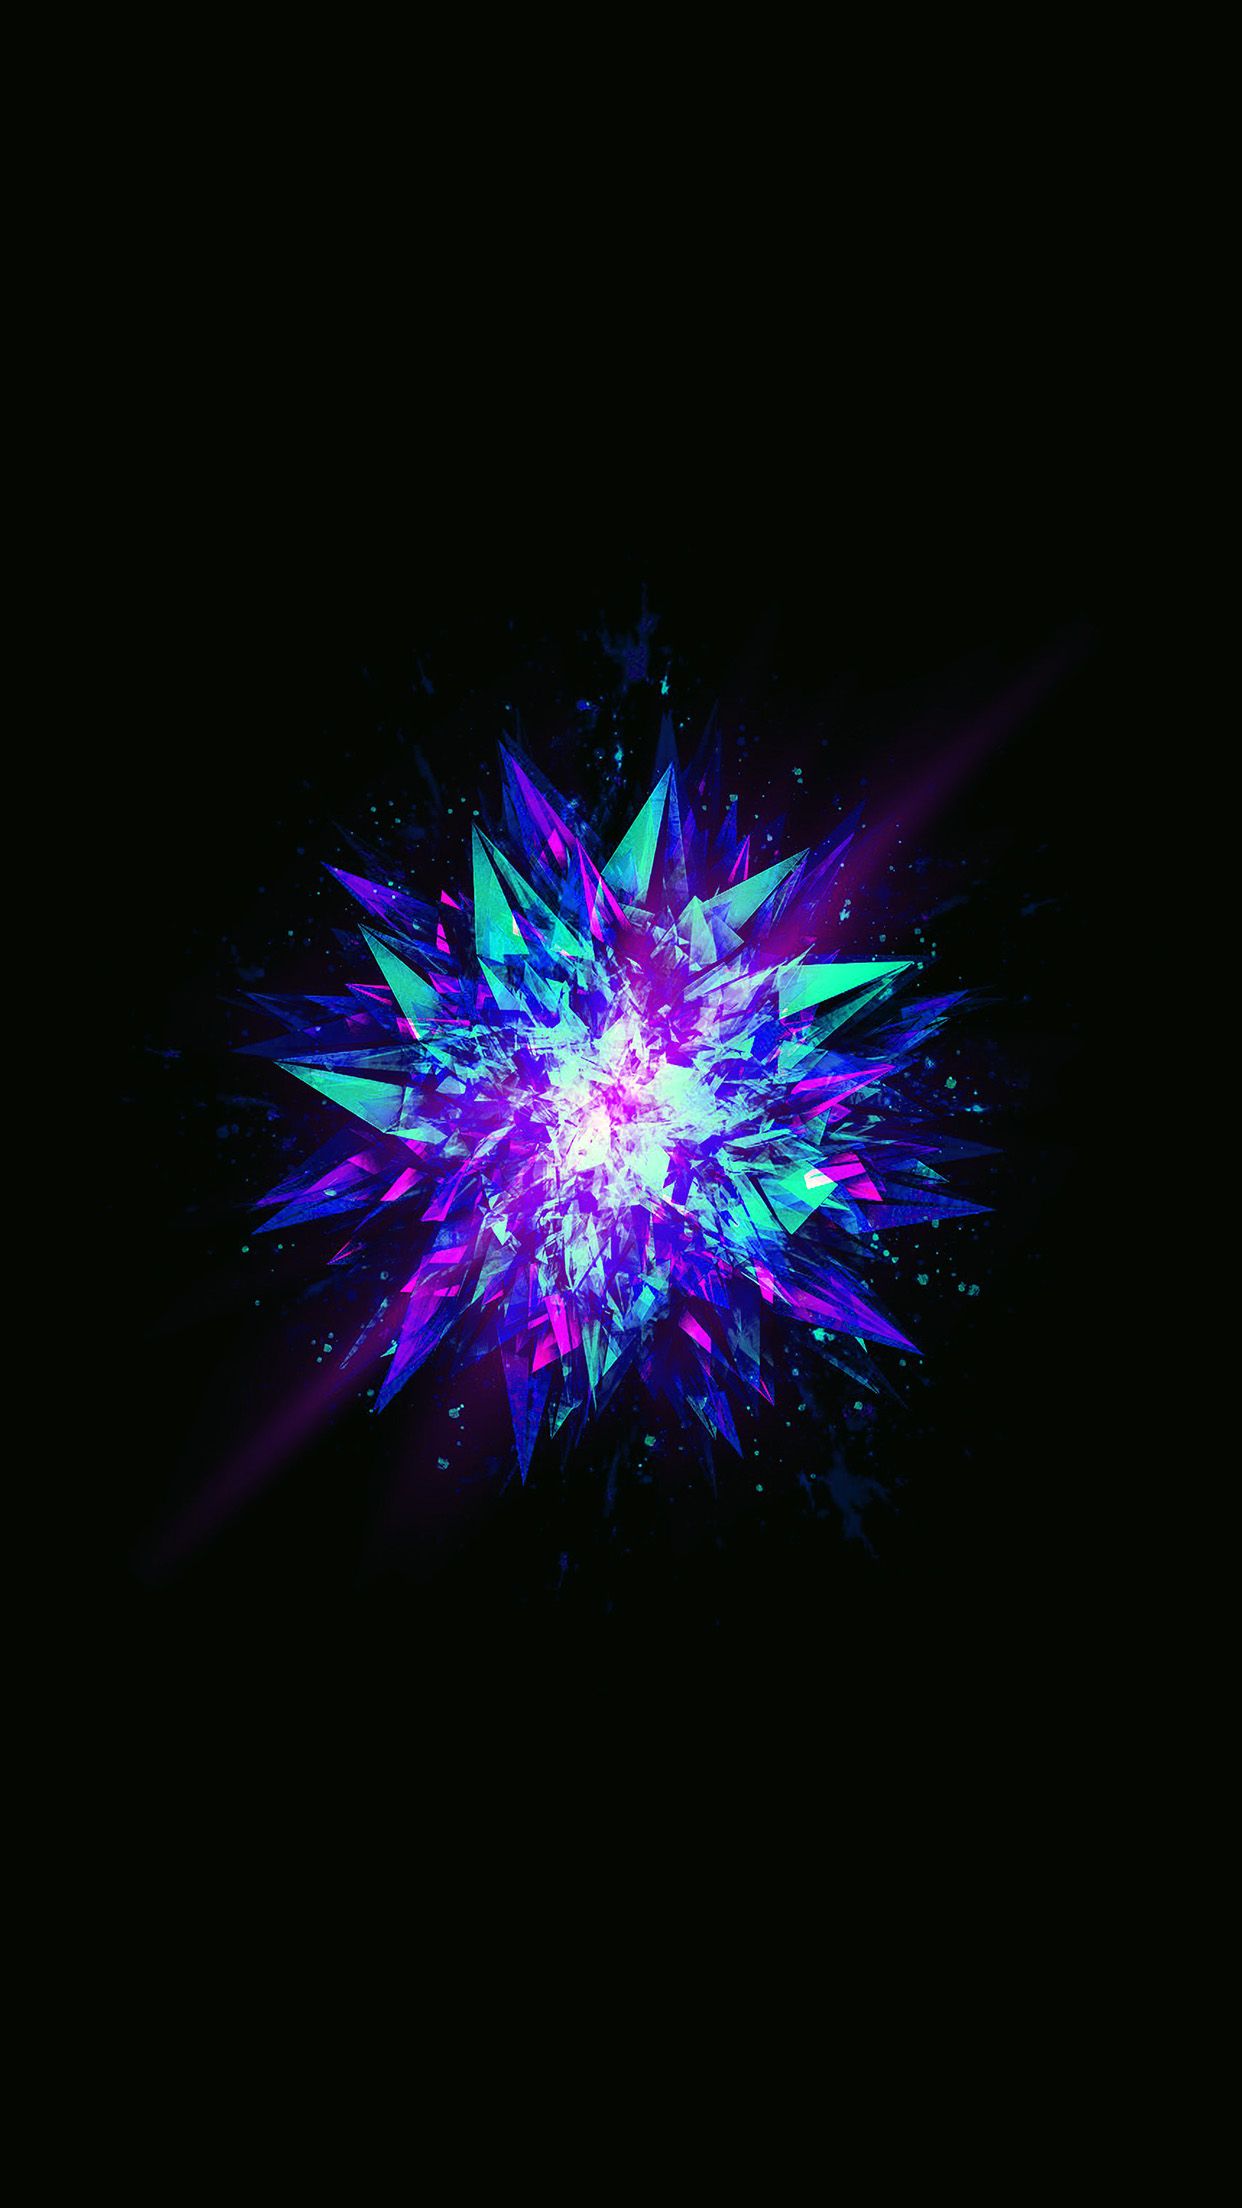 iPhone X wallpaper. fractal blast minimal dark abstract illustration art blue